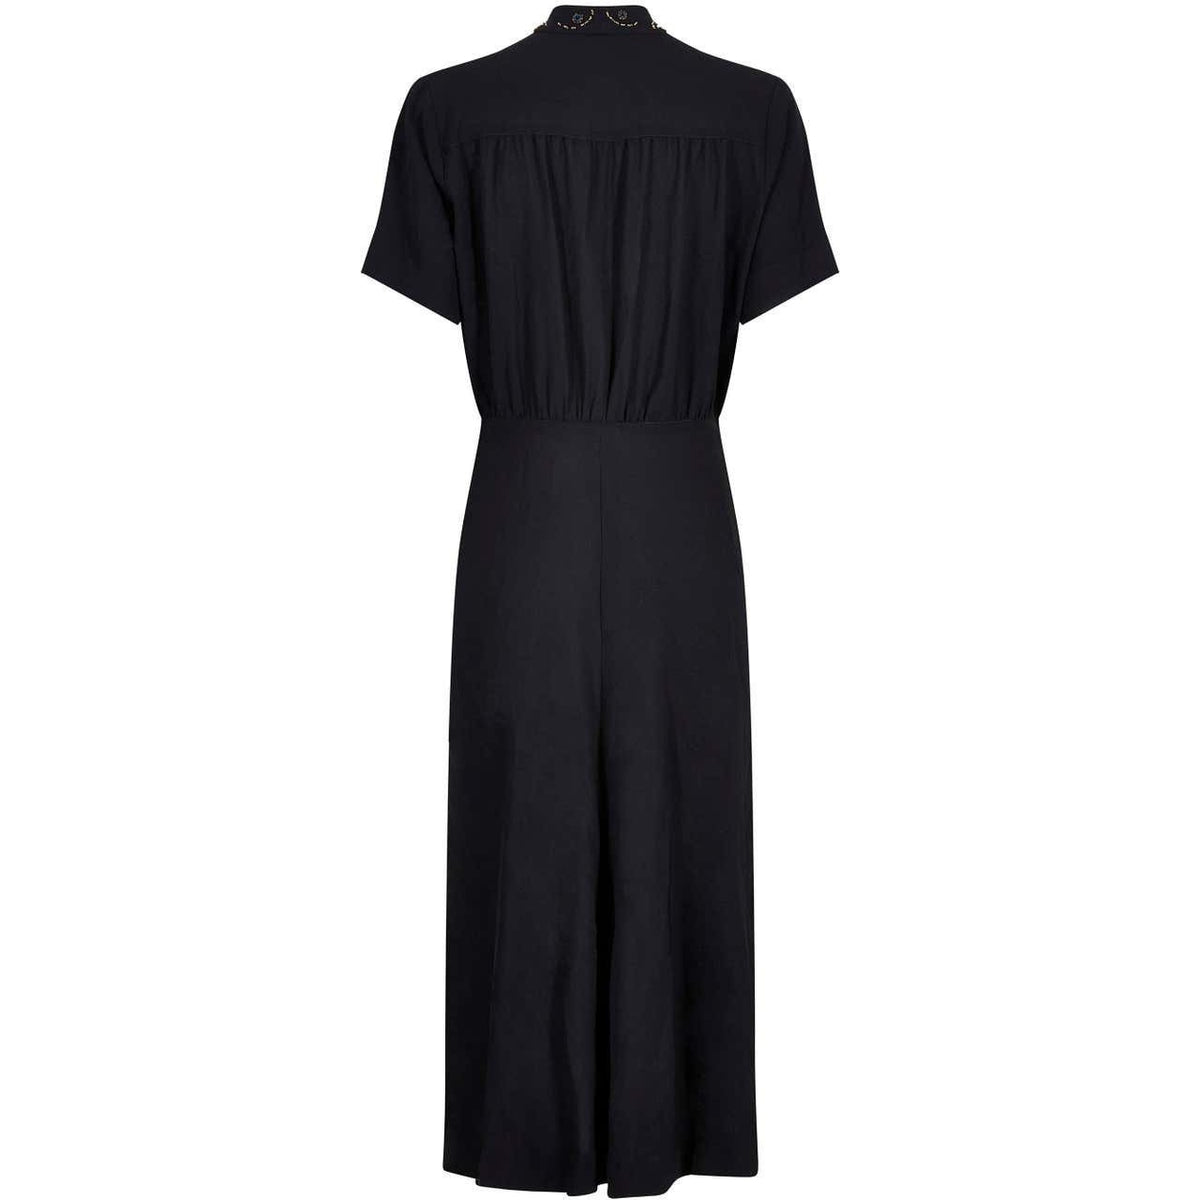 ARCHIVE - 1940s Black Crepe Comet Design Beaded Dress